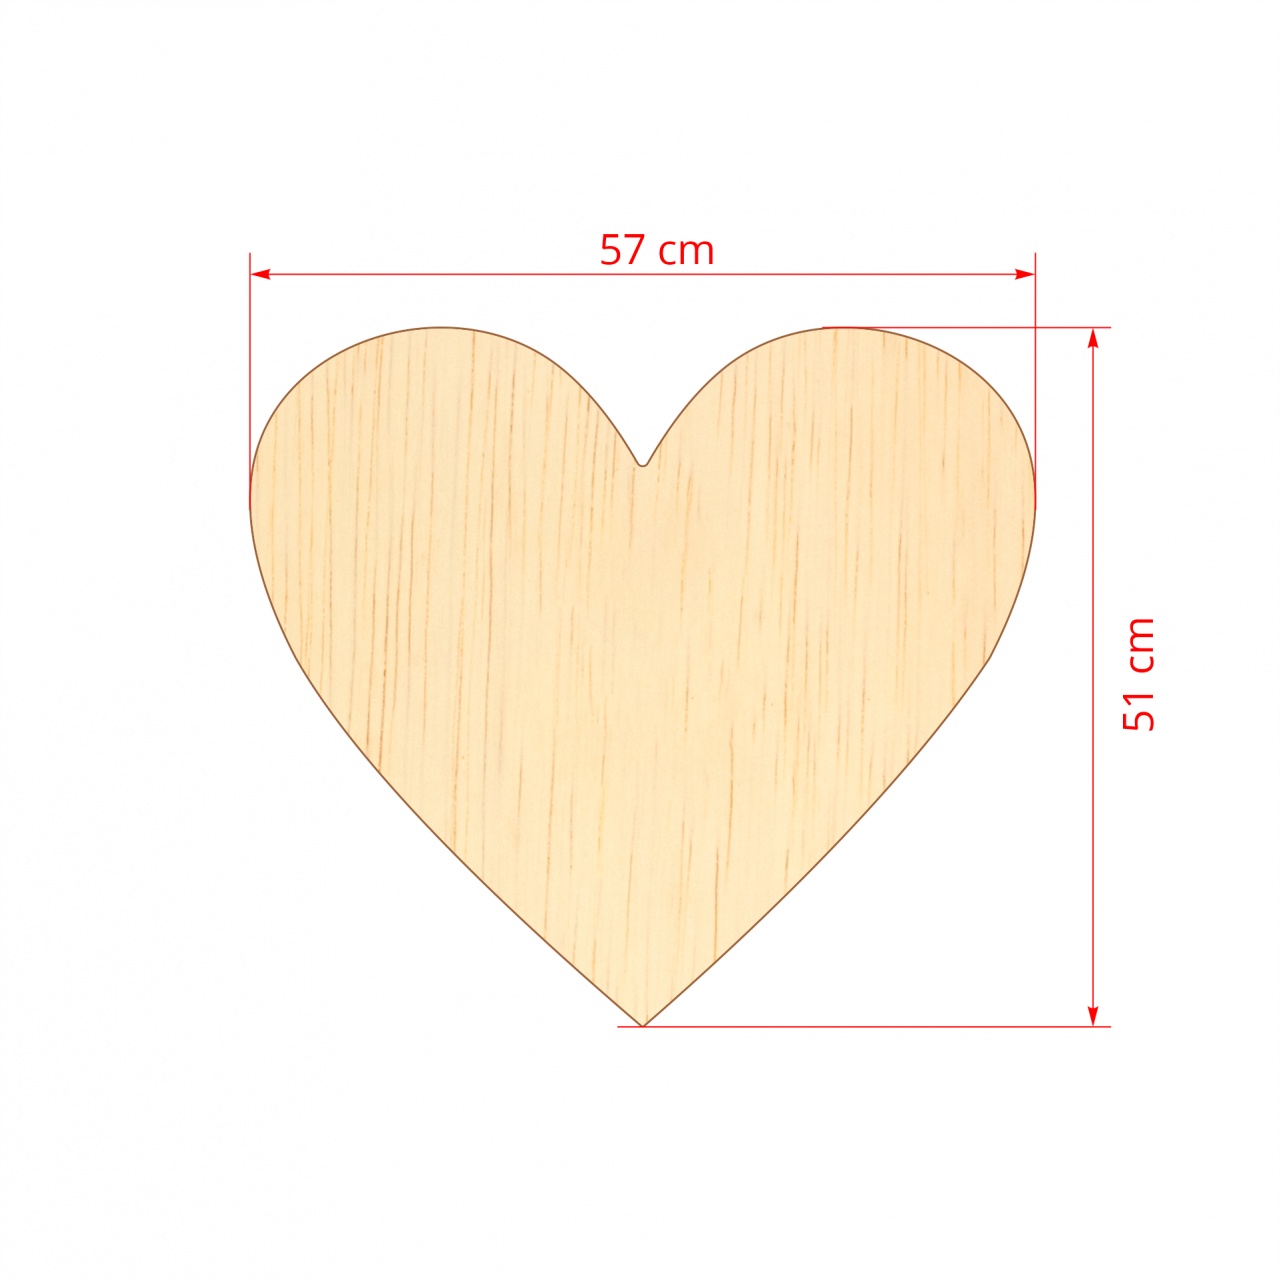 Inimă mare Groom, 26×23 cm, placaj lemn